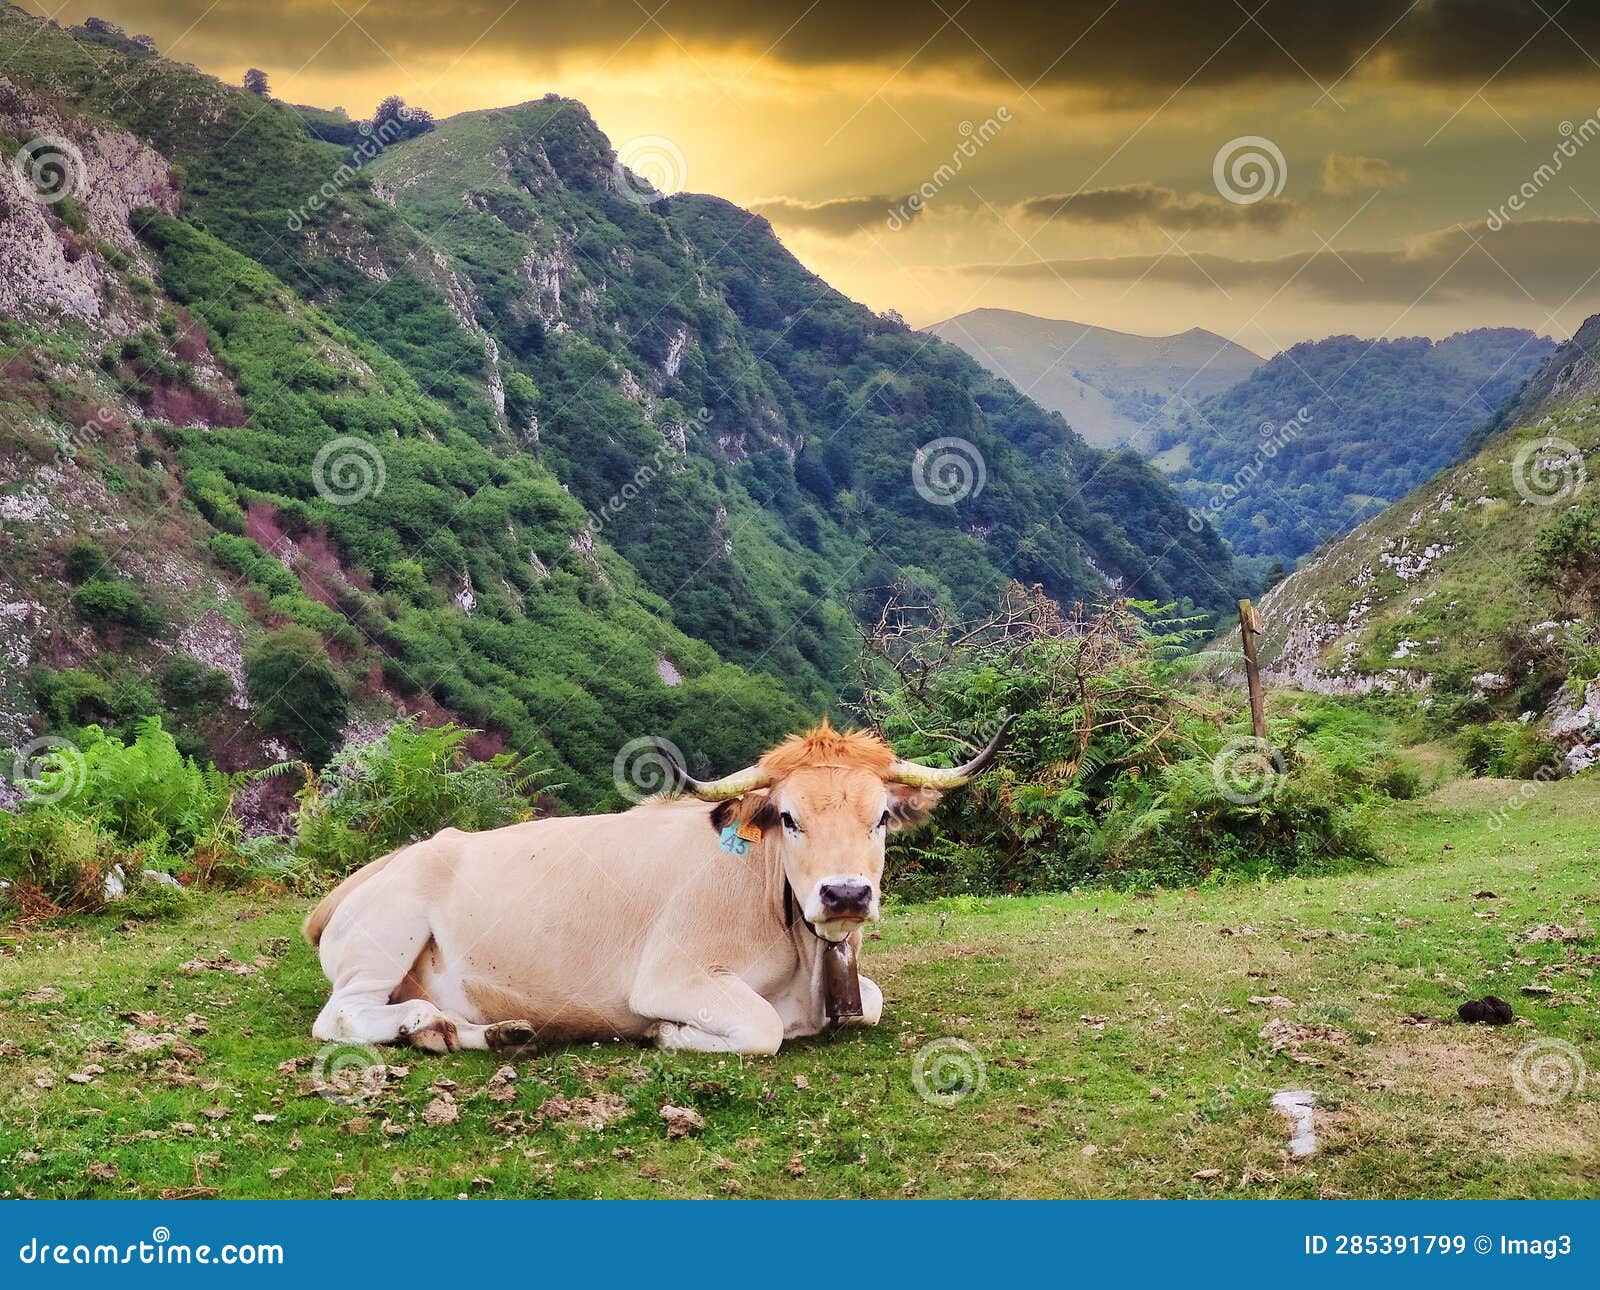 a cow next to foces del rio pendon, pendon gorges route, nava, asturias, spain